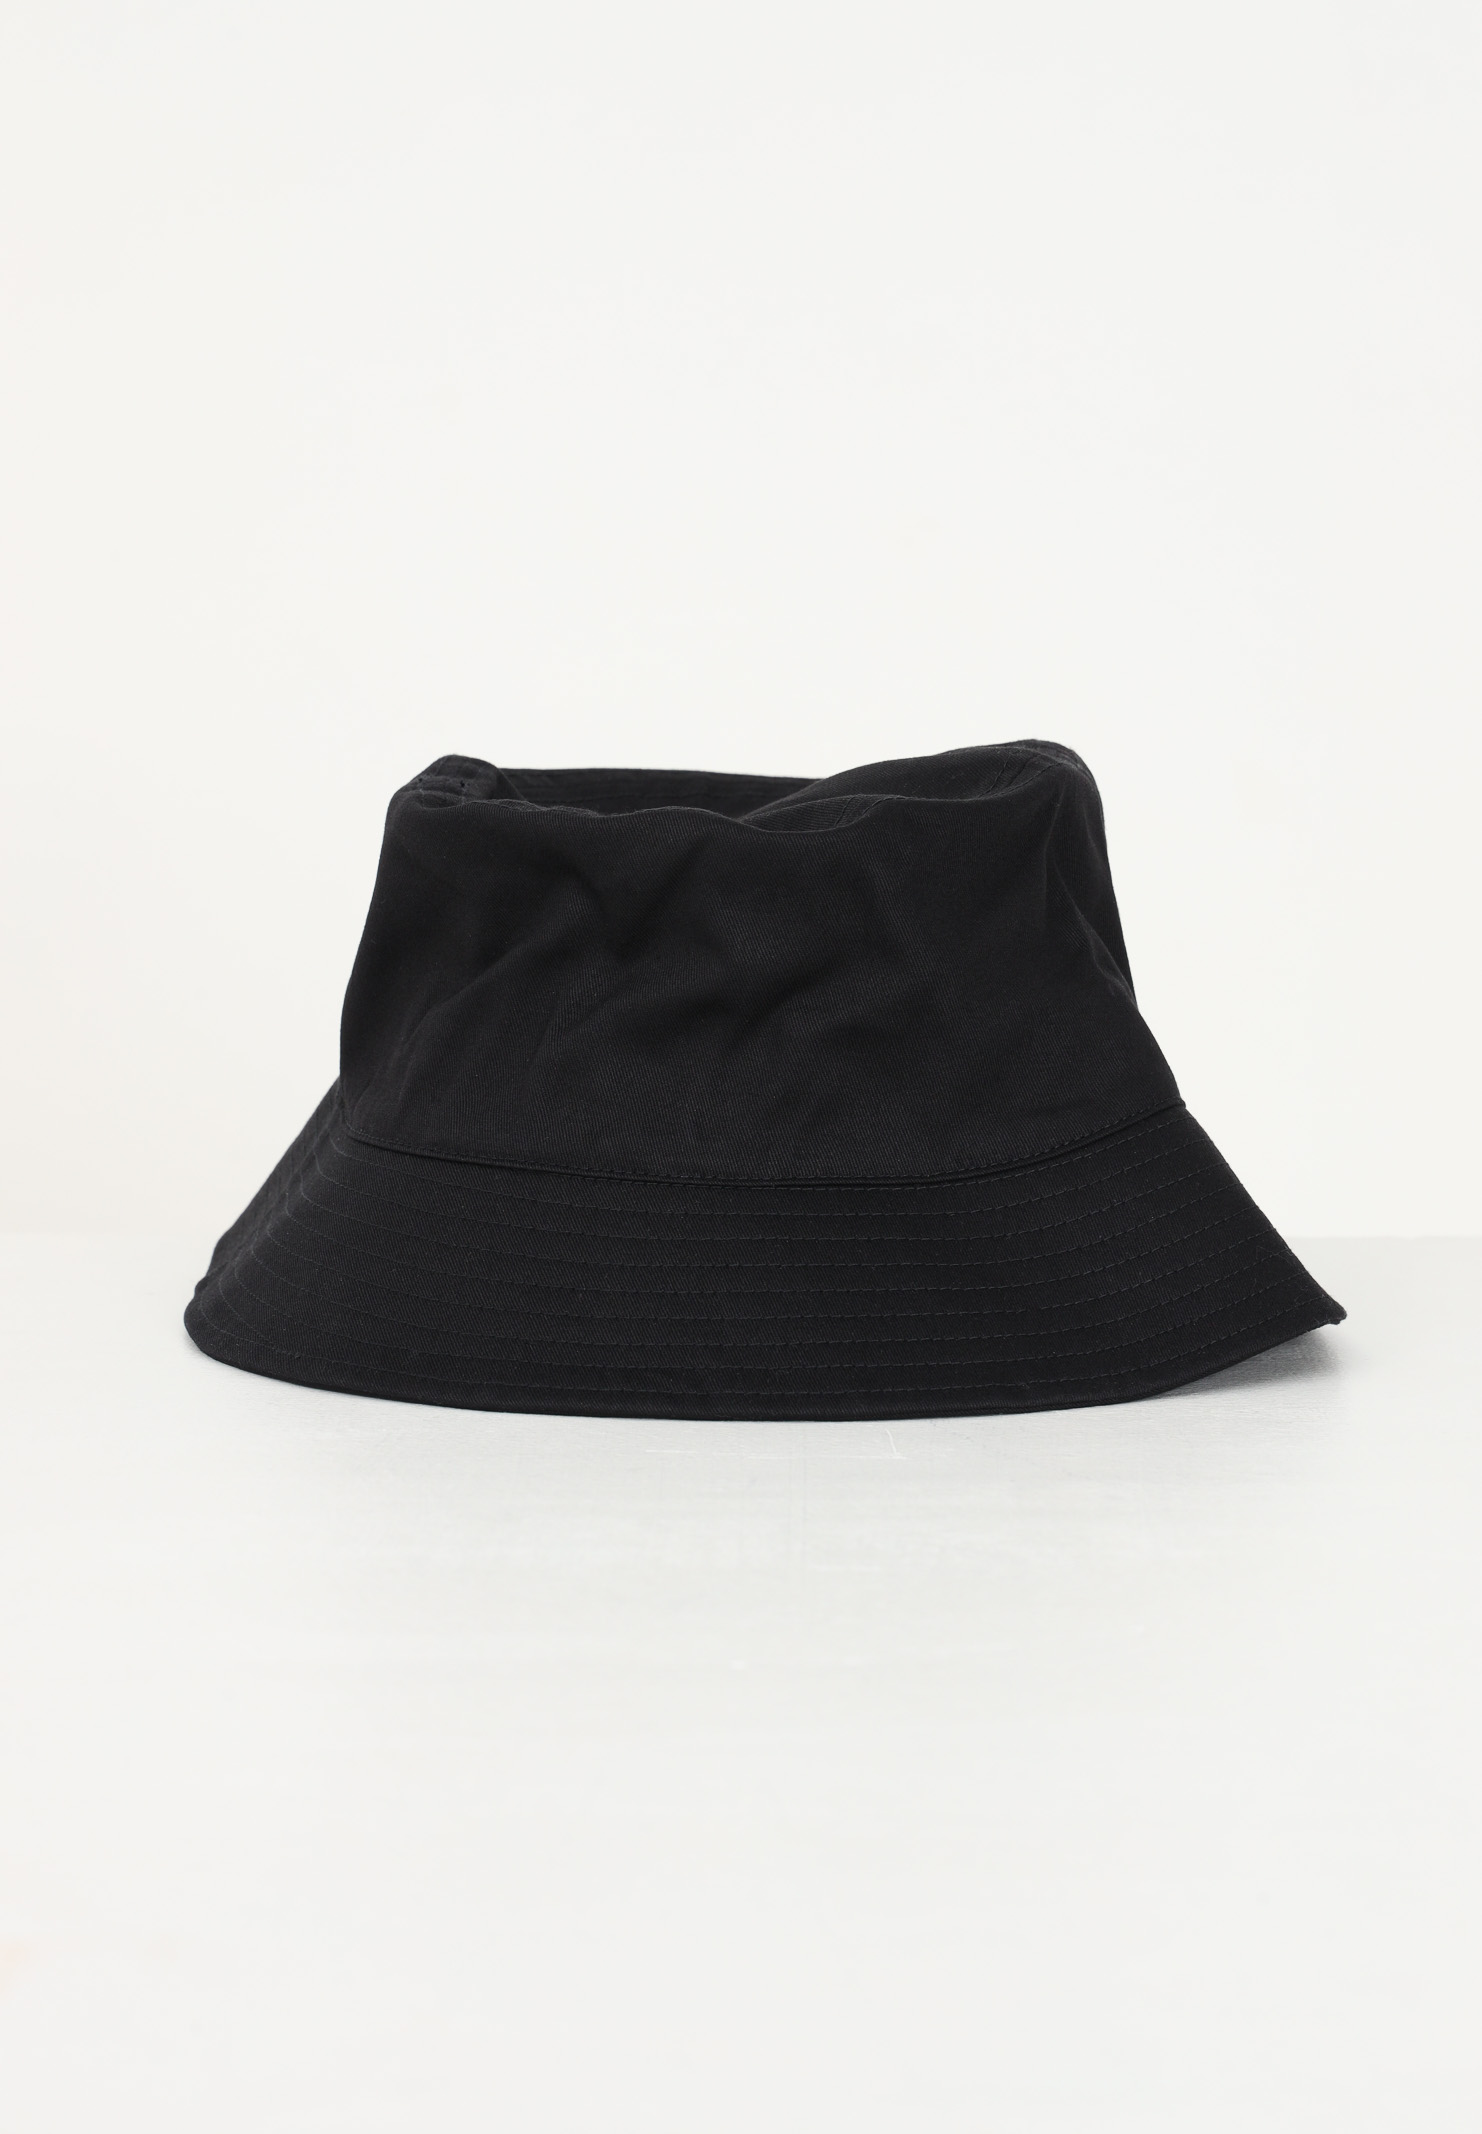 Black bucket for men and women with logo patch - CALVIN KLEIN JEANS -  Pavidas | Flex Caps